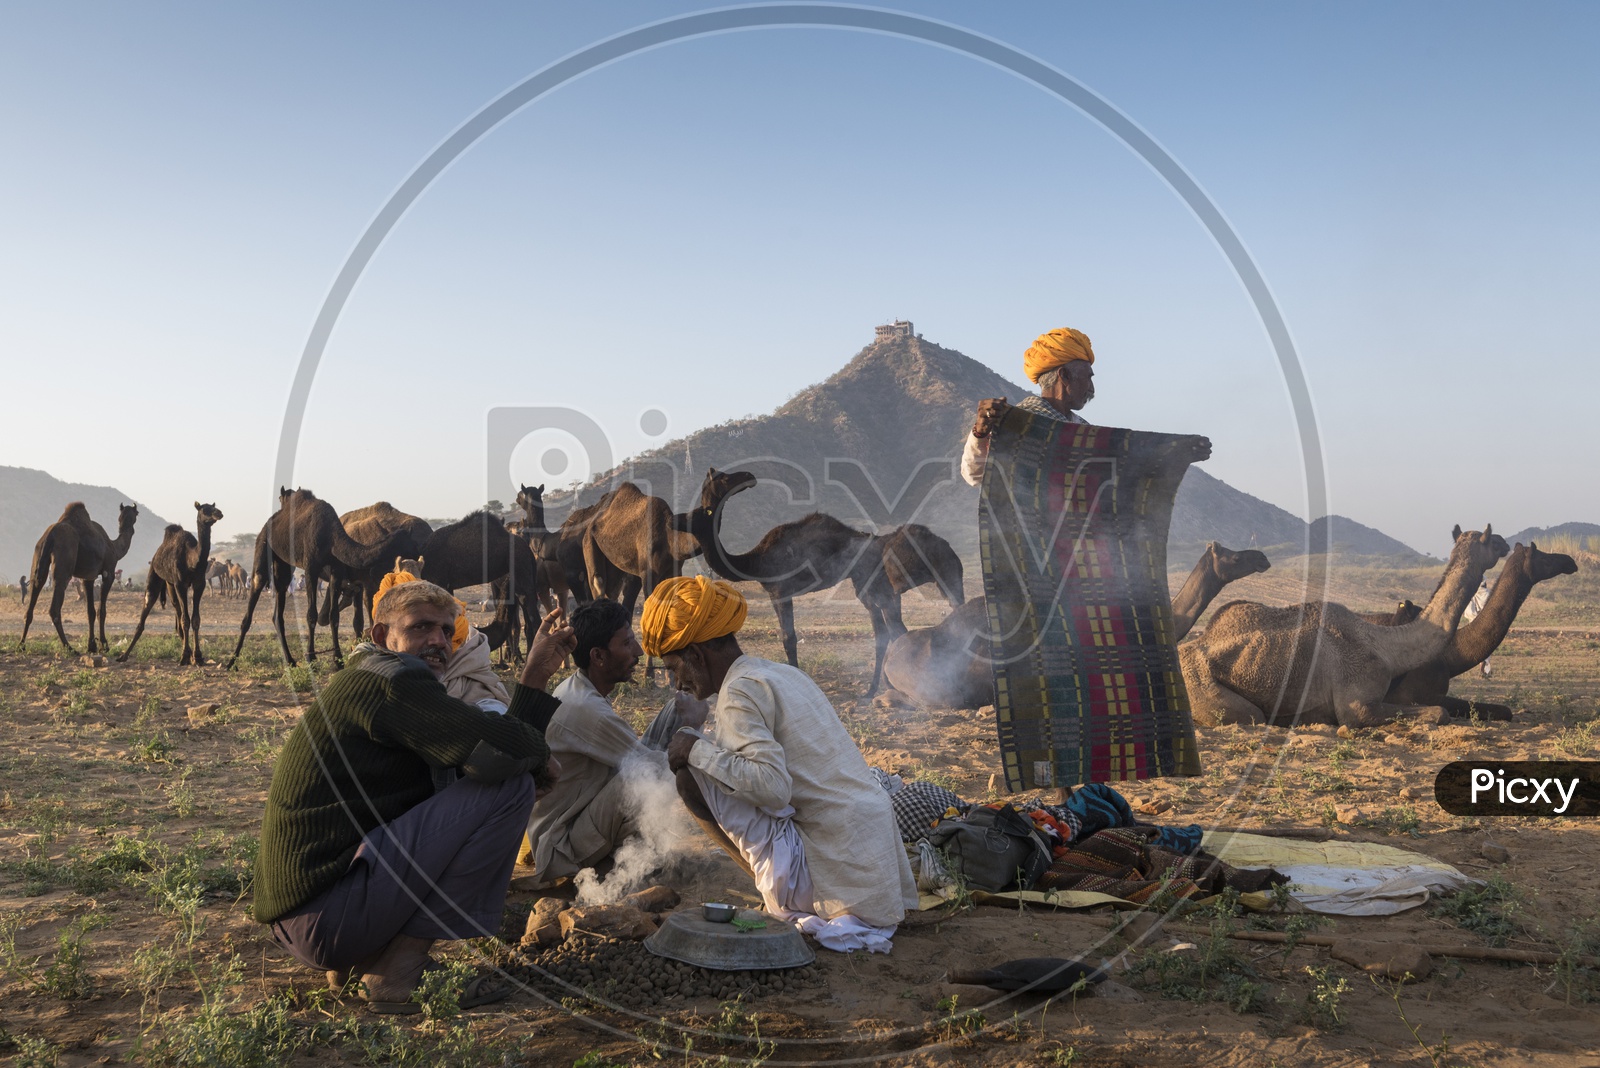 Camel herders Cooking Food in Pushkar Camel Fair